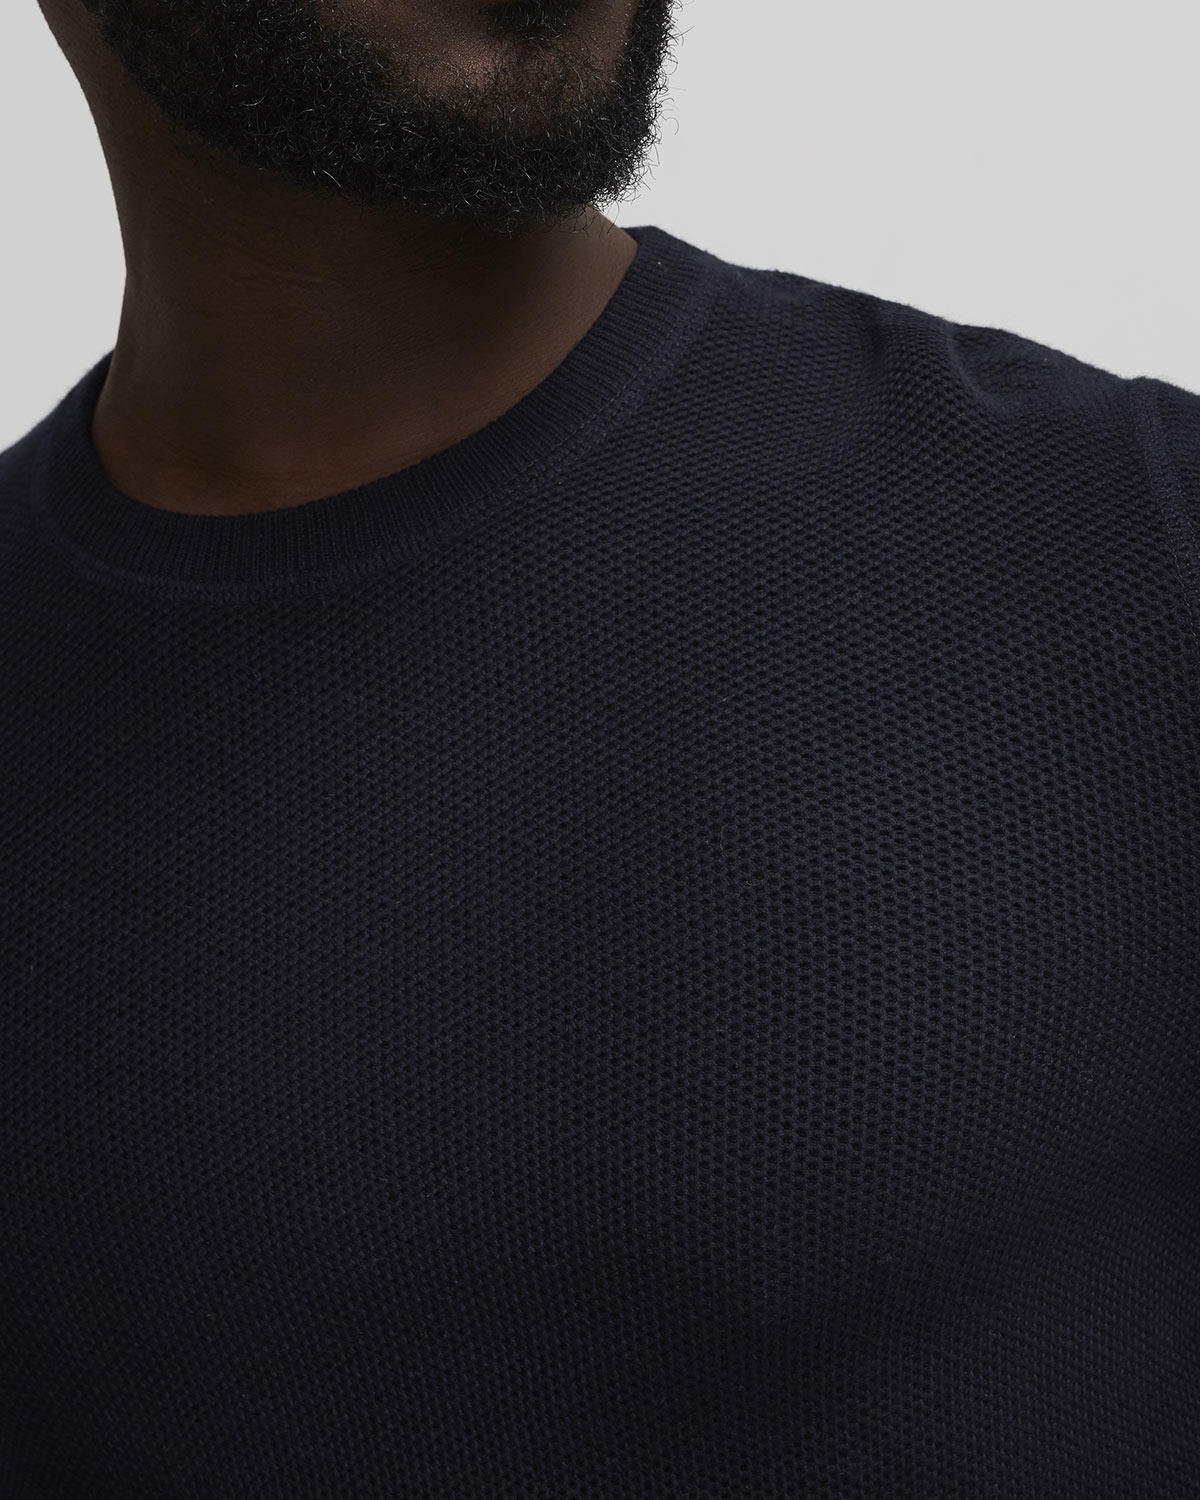 Hubert men's sweater - Black - Buy online NN07®